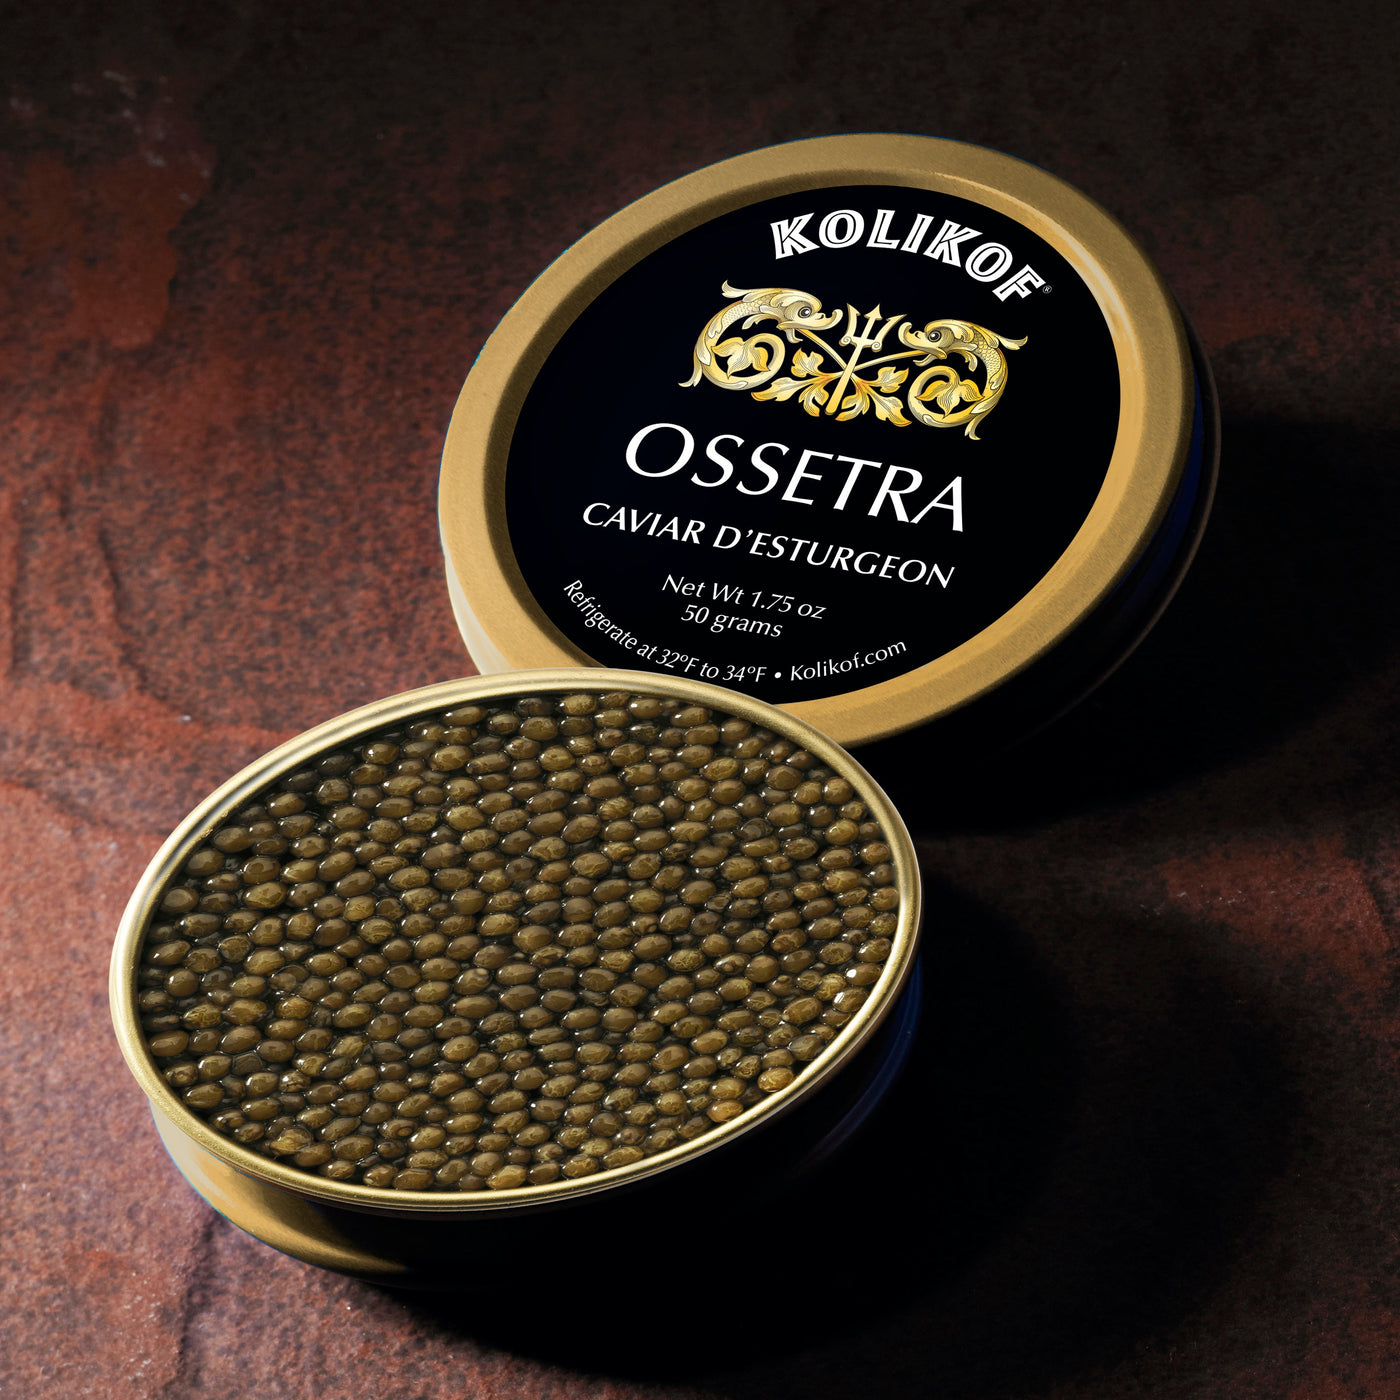 Buy Russian Ossetra sturgeon caviar online. Kolikof is the finest Osetra in the world.